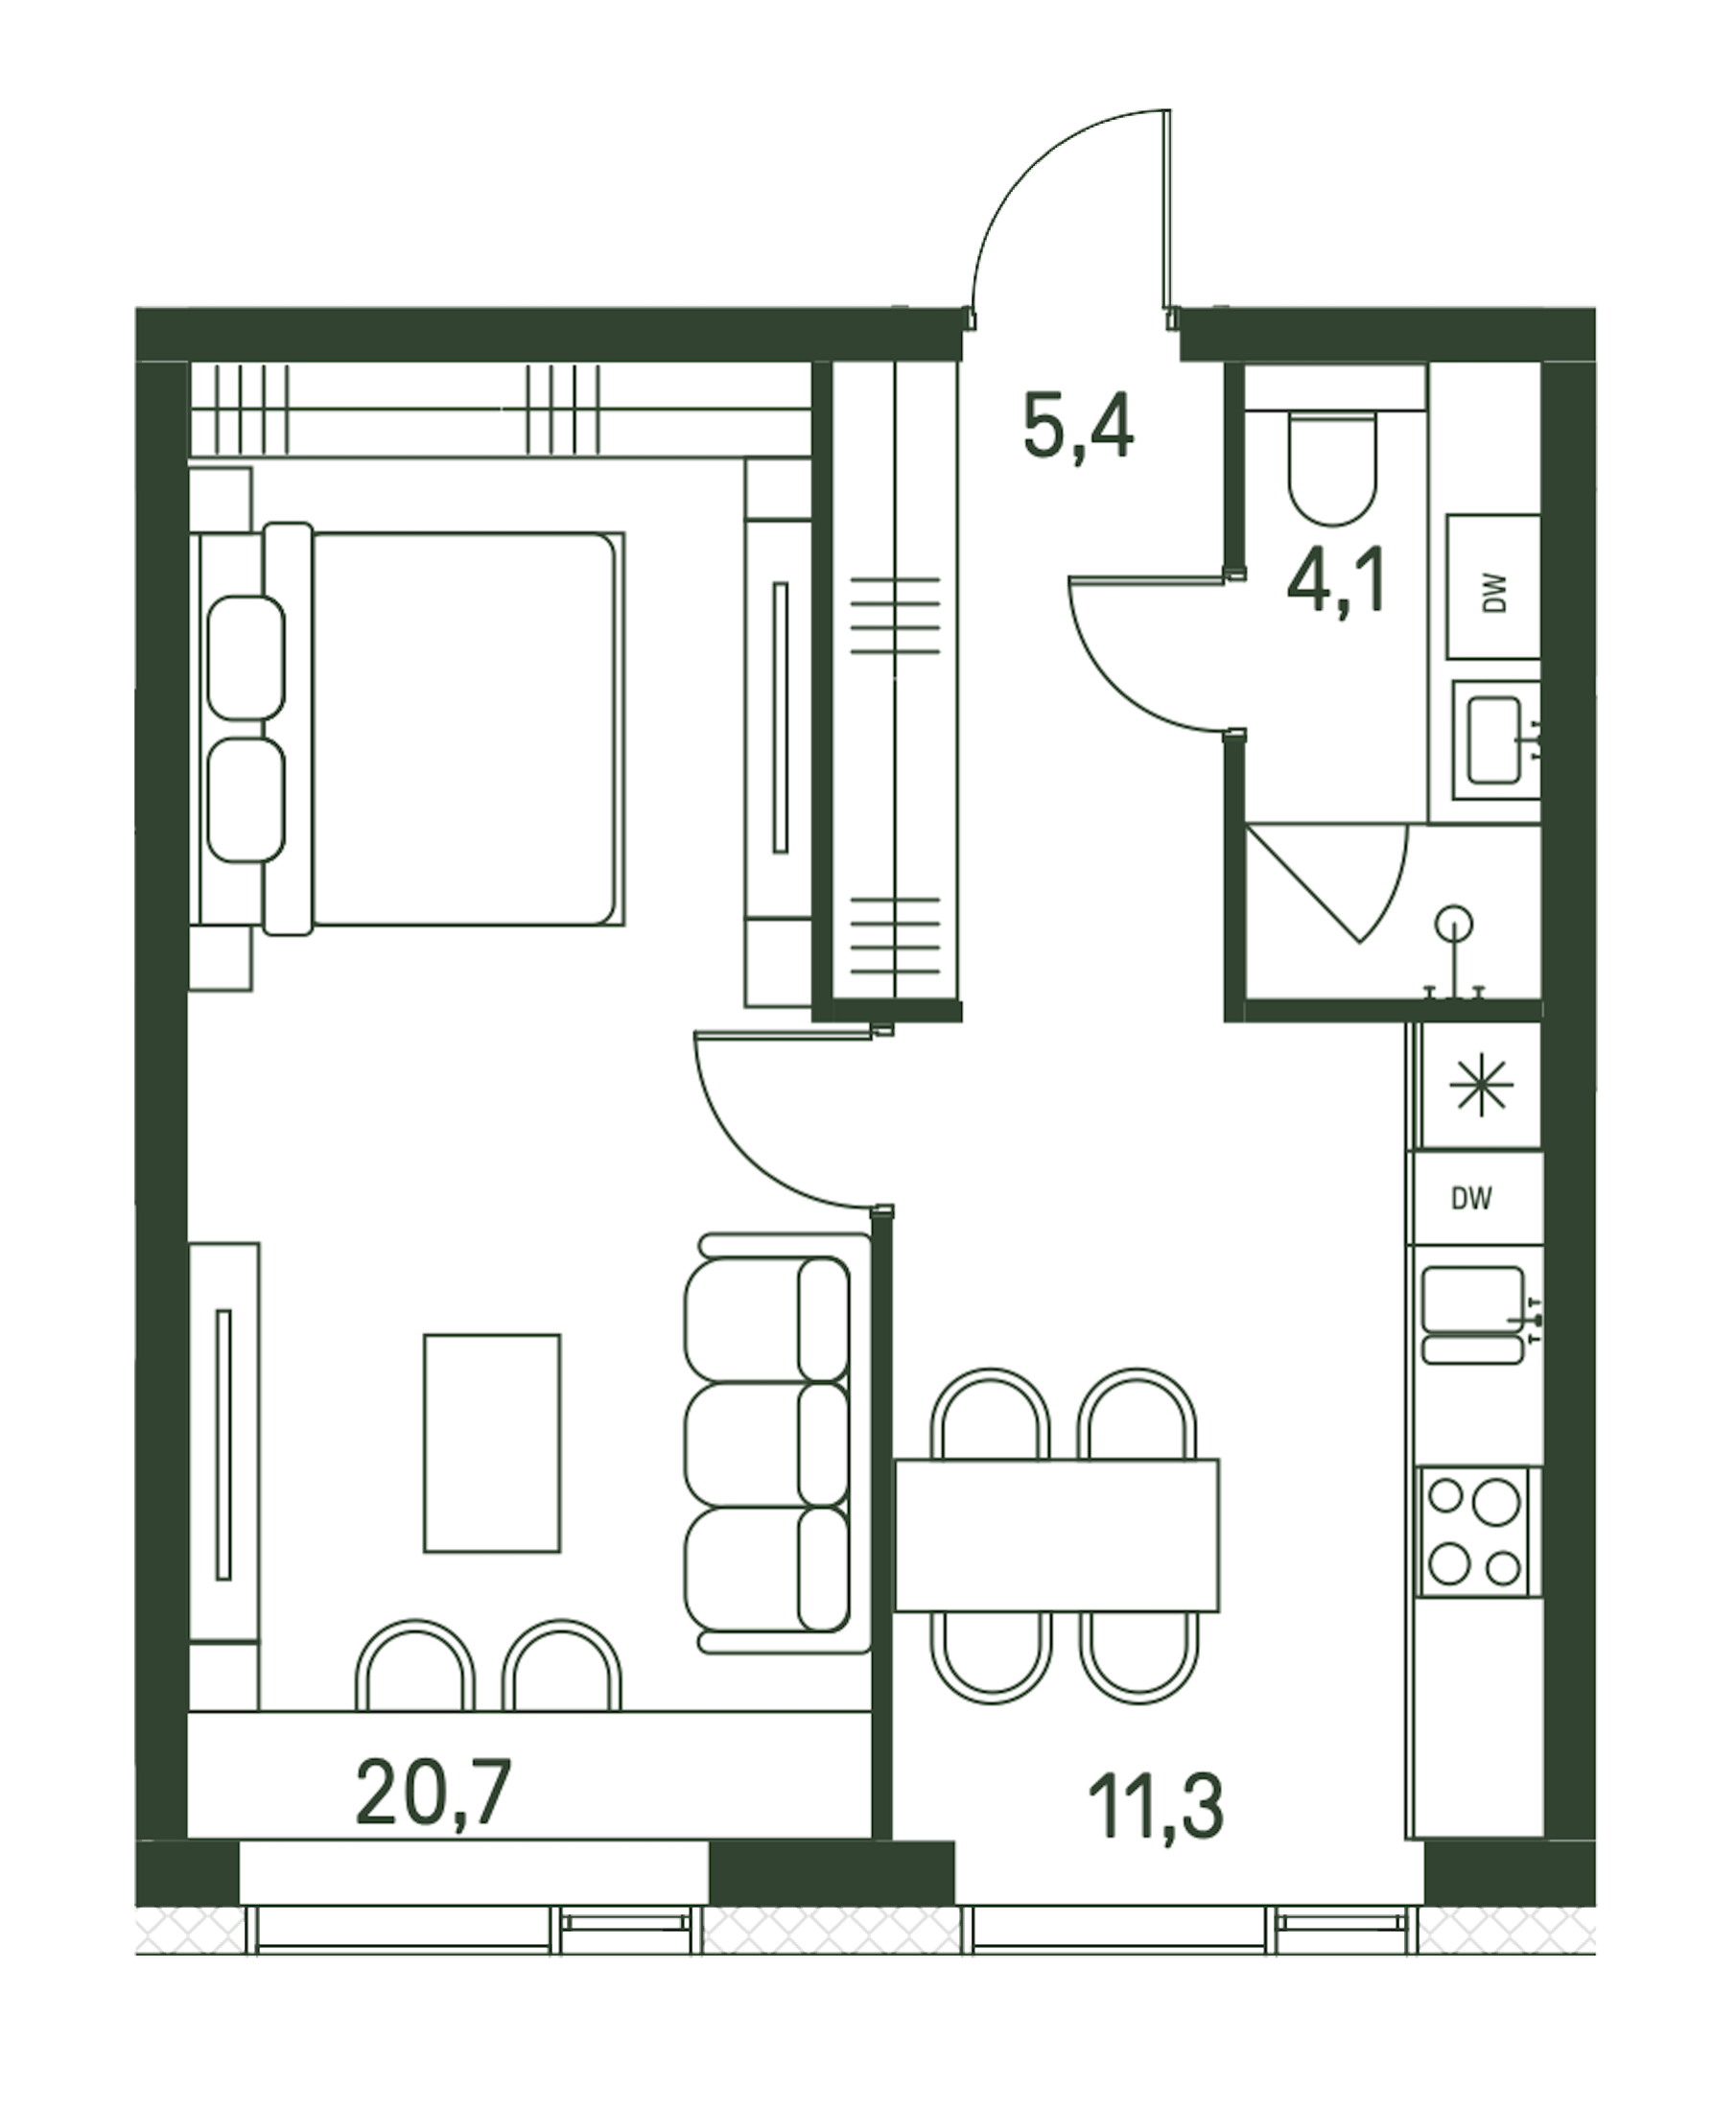 1 комн. квартира, 41.5 м², 15 этаж 